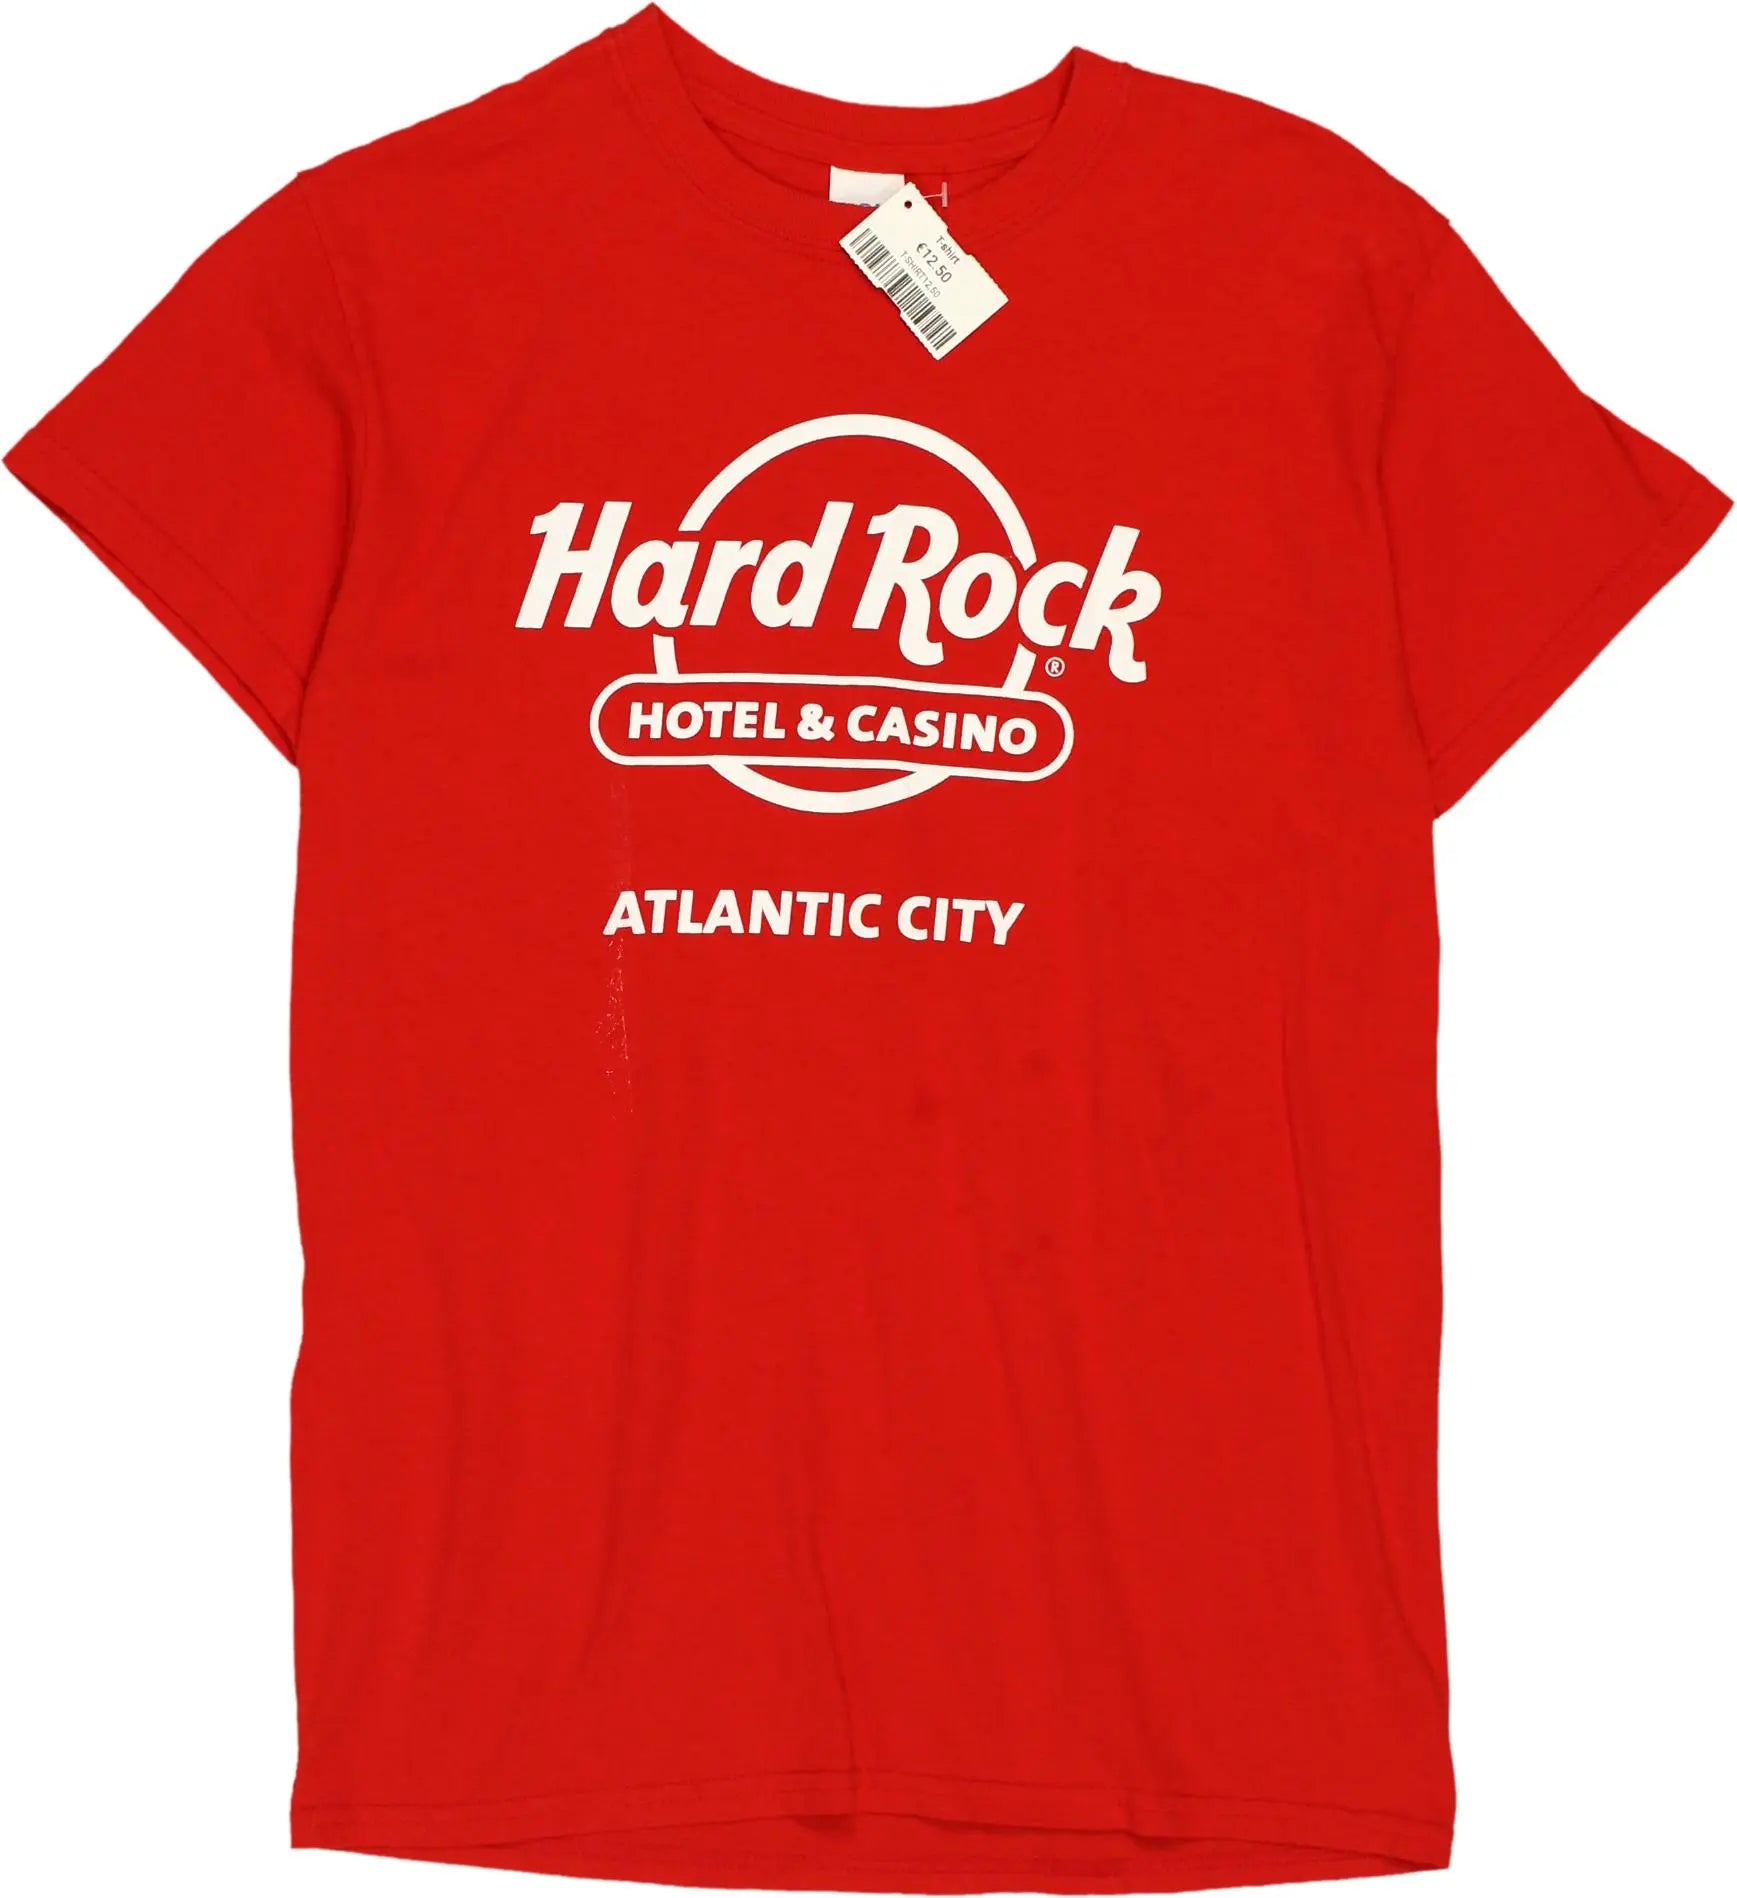 Gildan - Hsrd Rock T-shirt- ThriftTale.com - Vintage and second handclothing